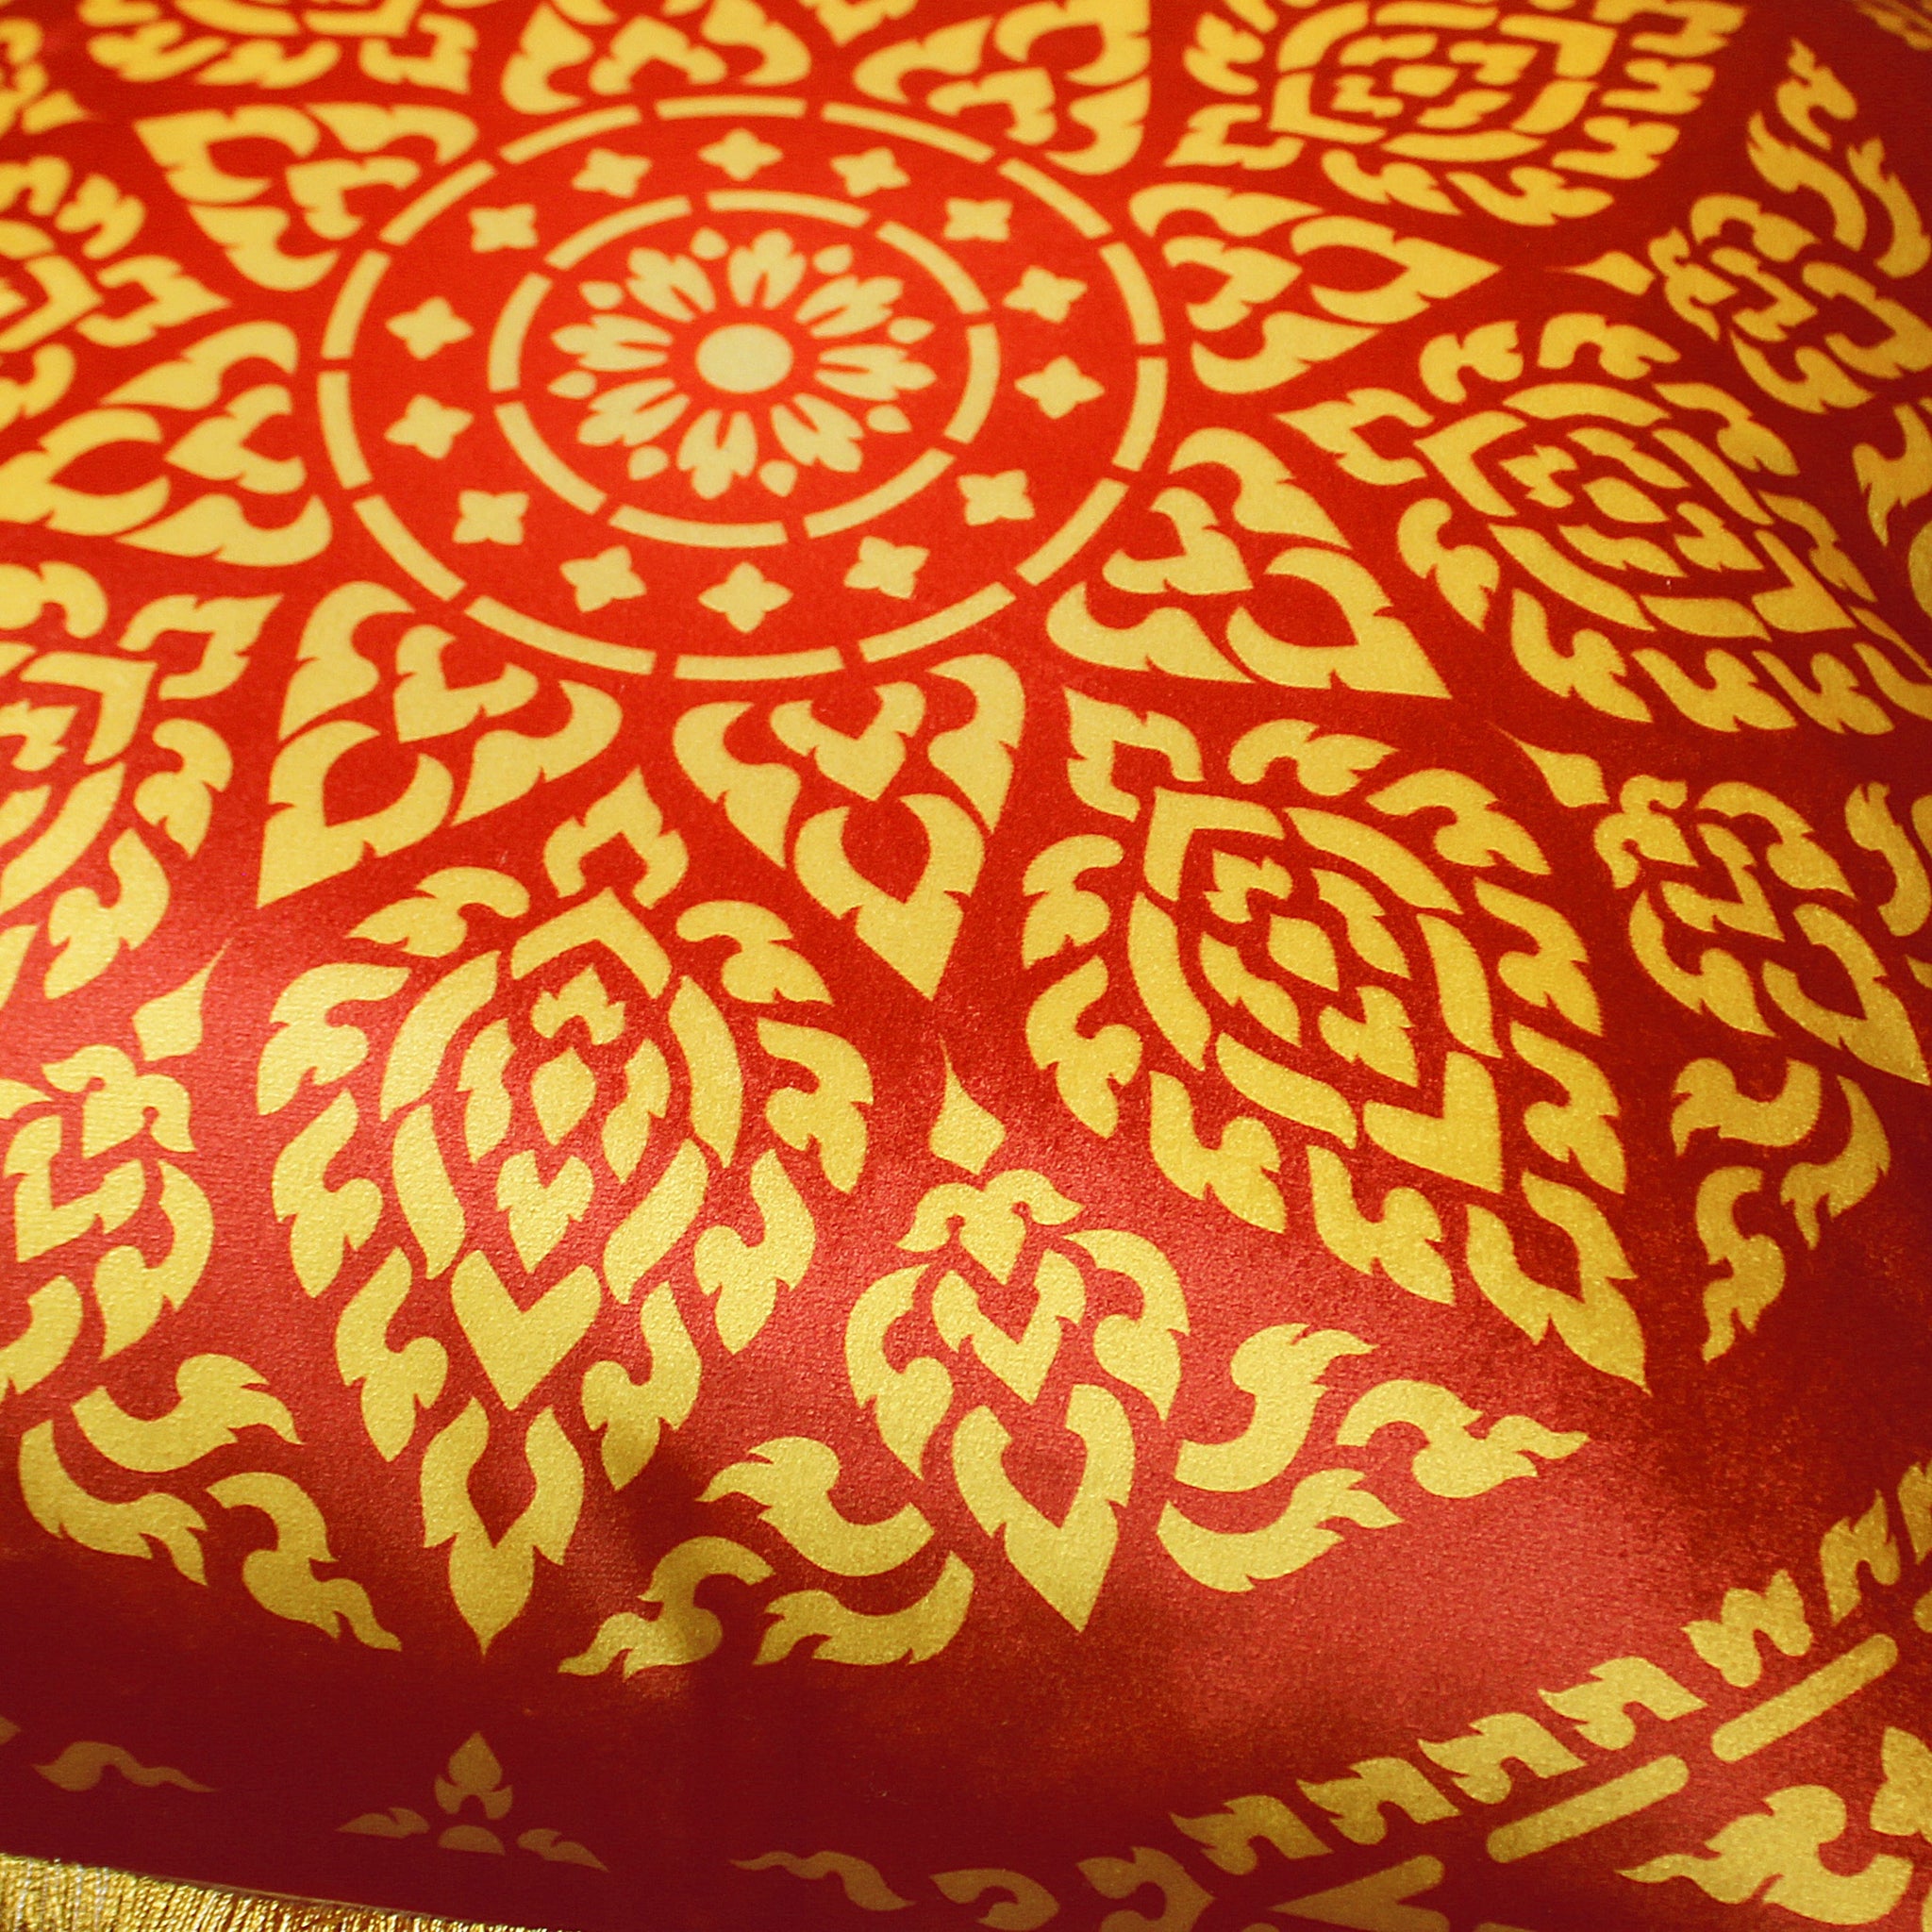 Red Velvet Cushion Cover Arabesque Floral Decorative Pillowcase Classic Home Decor Throw Pillow for Sofa Chair Living Room 45x45 cm 18x18 In